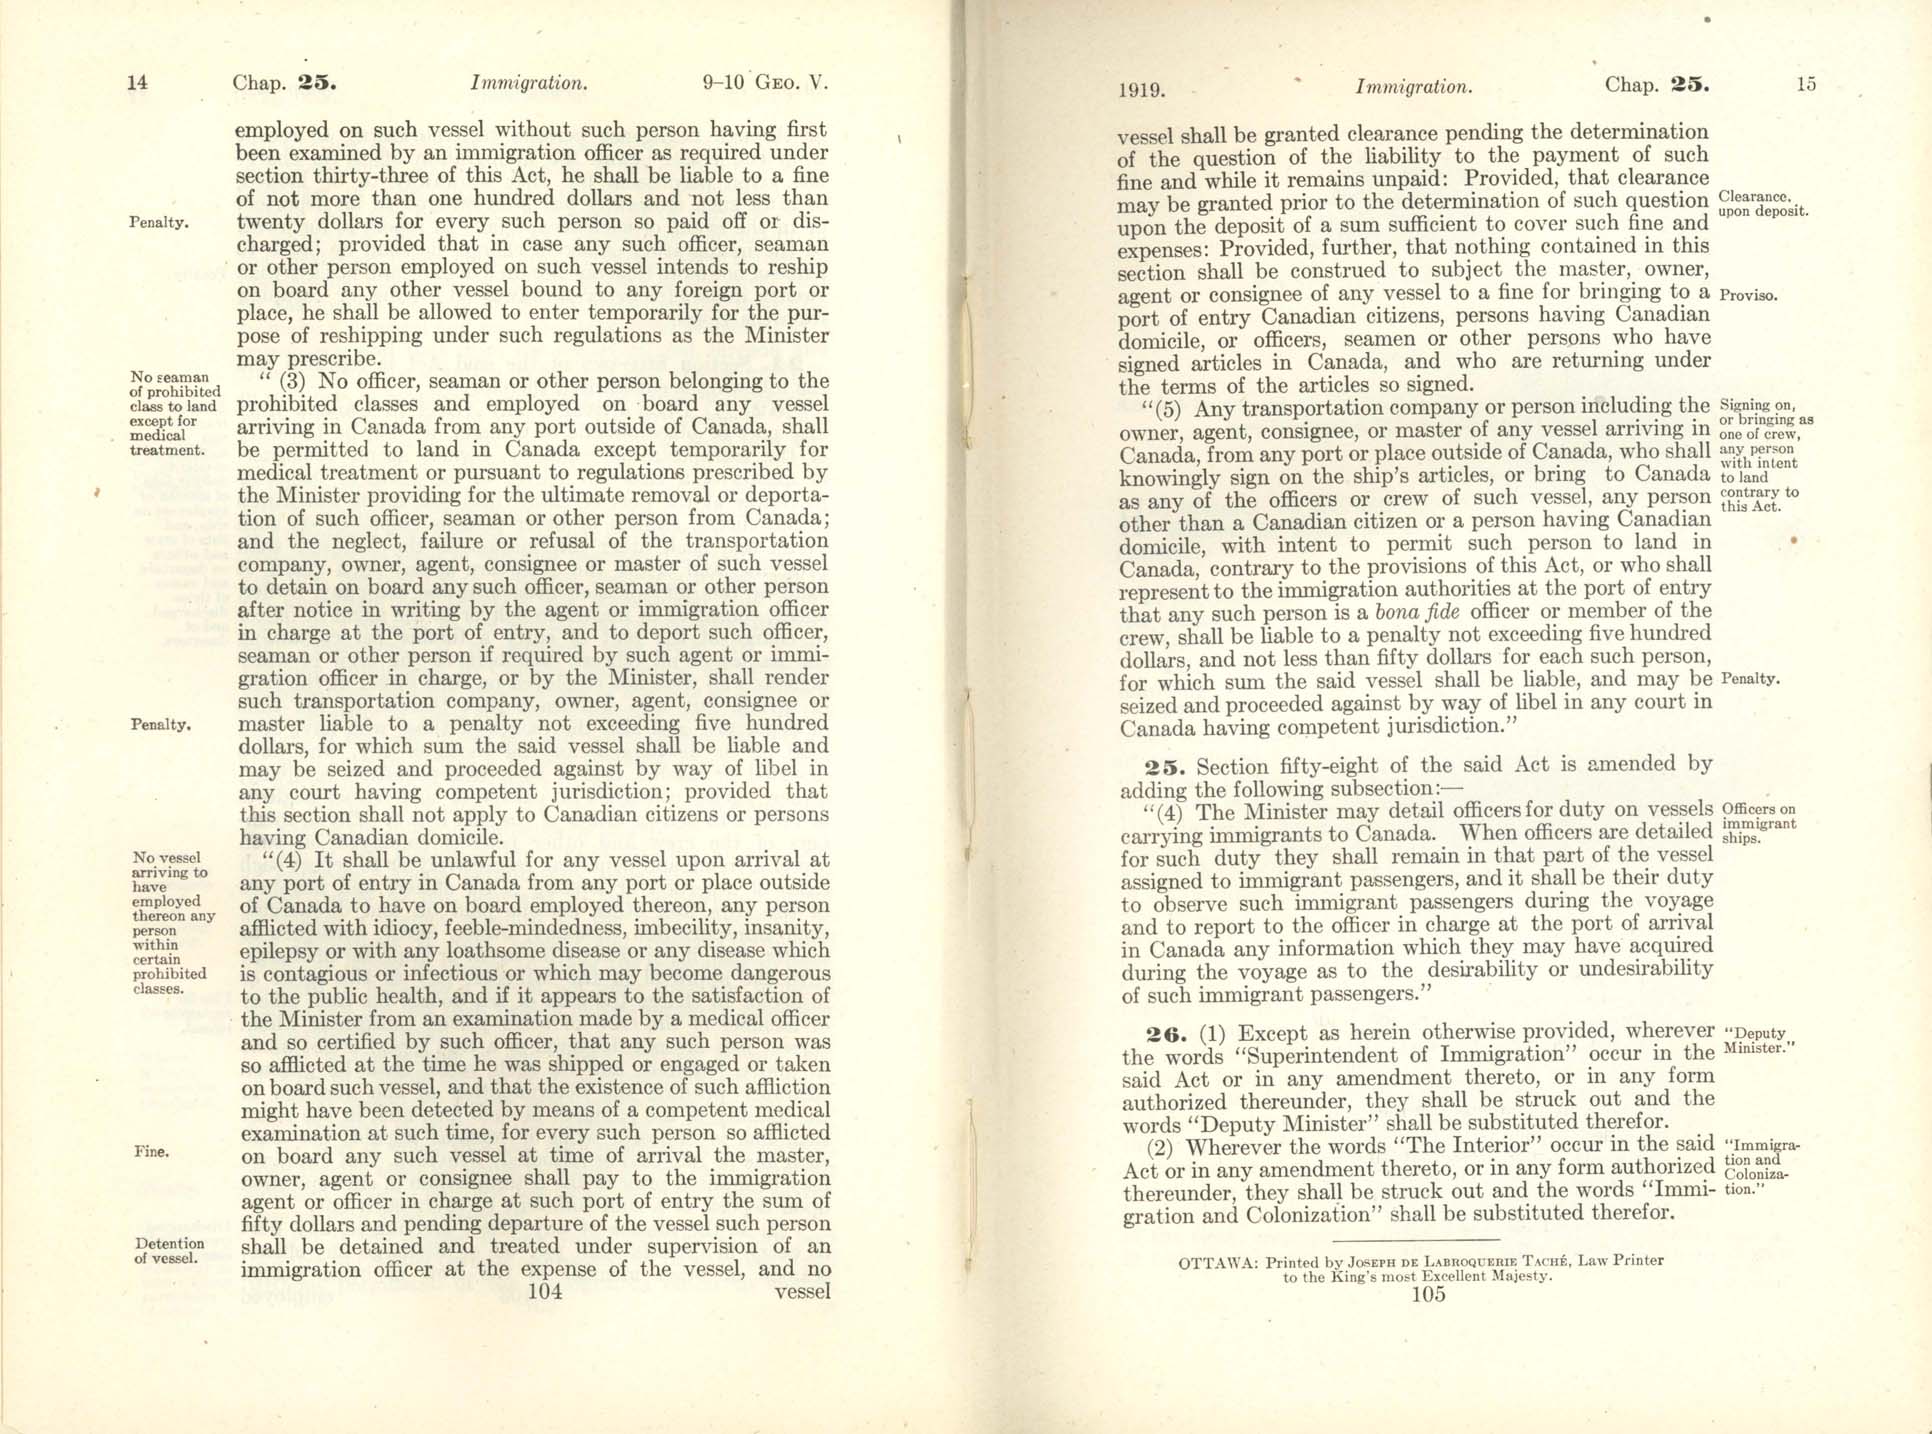 Page 104, 105 Immigration Act Amendment, 1919